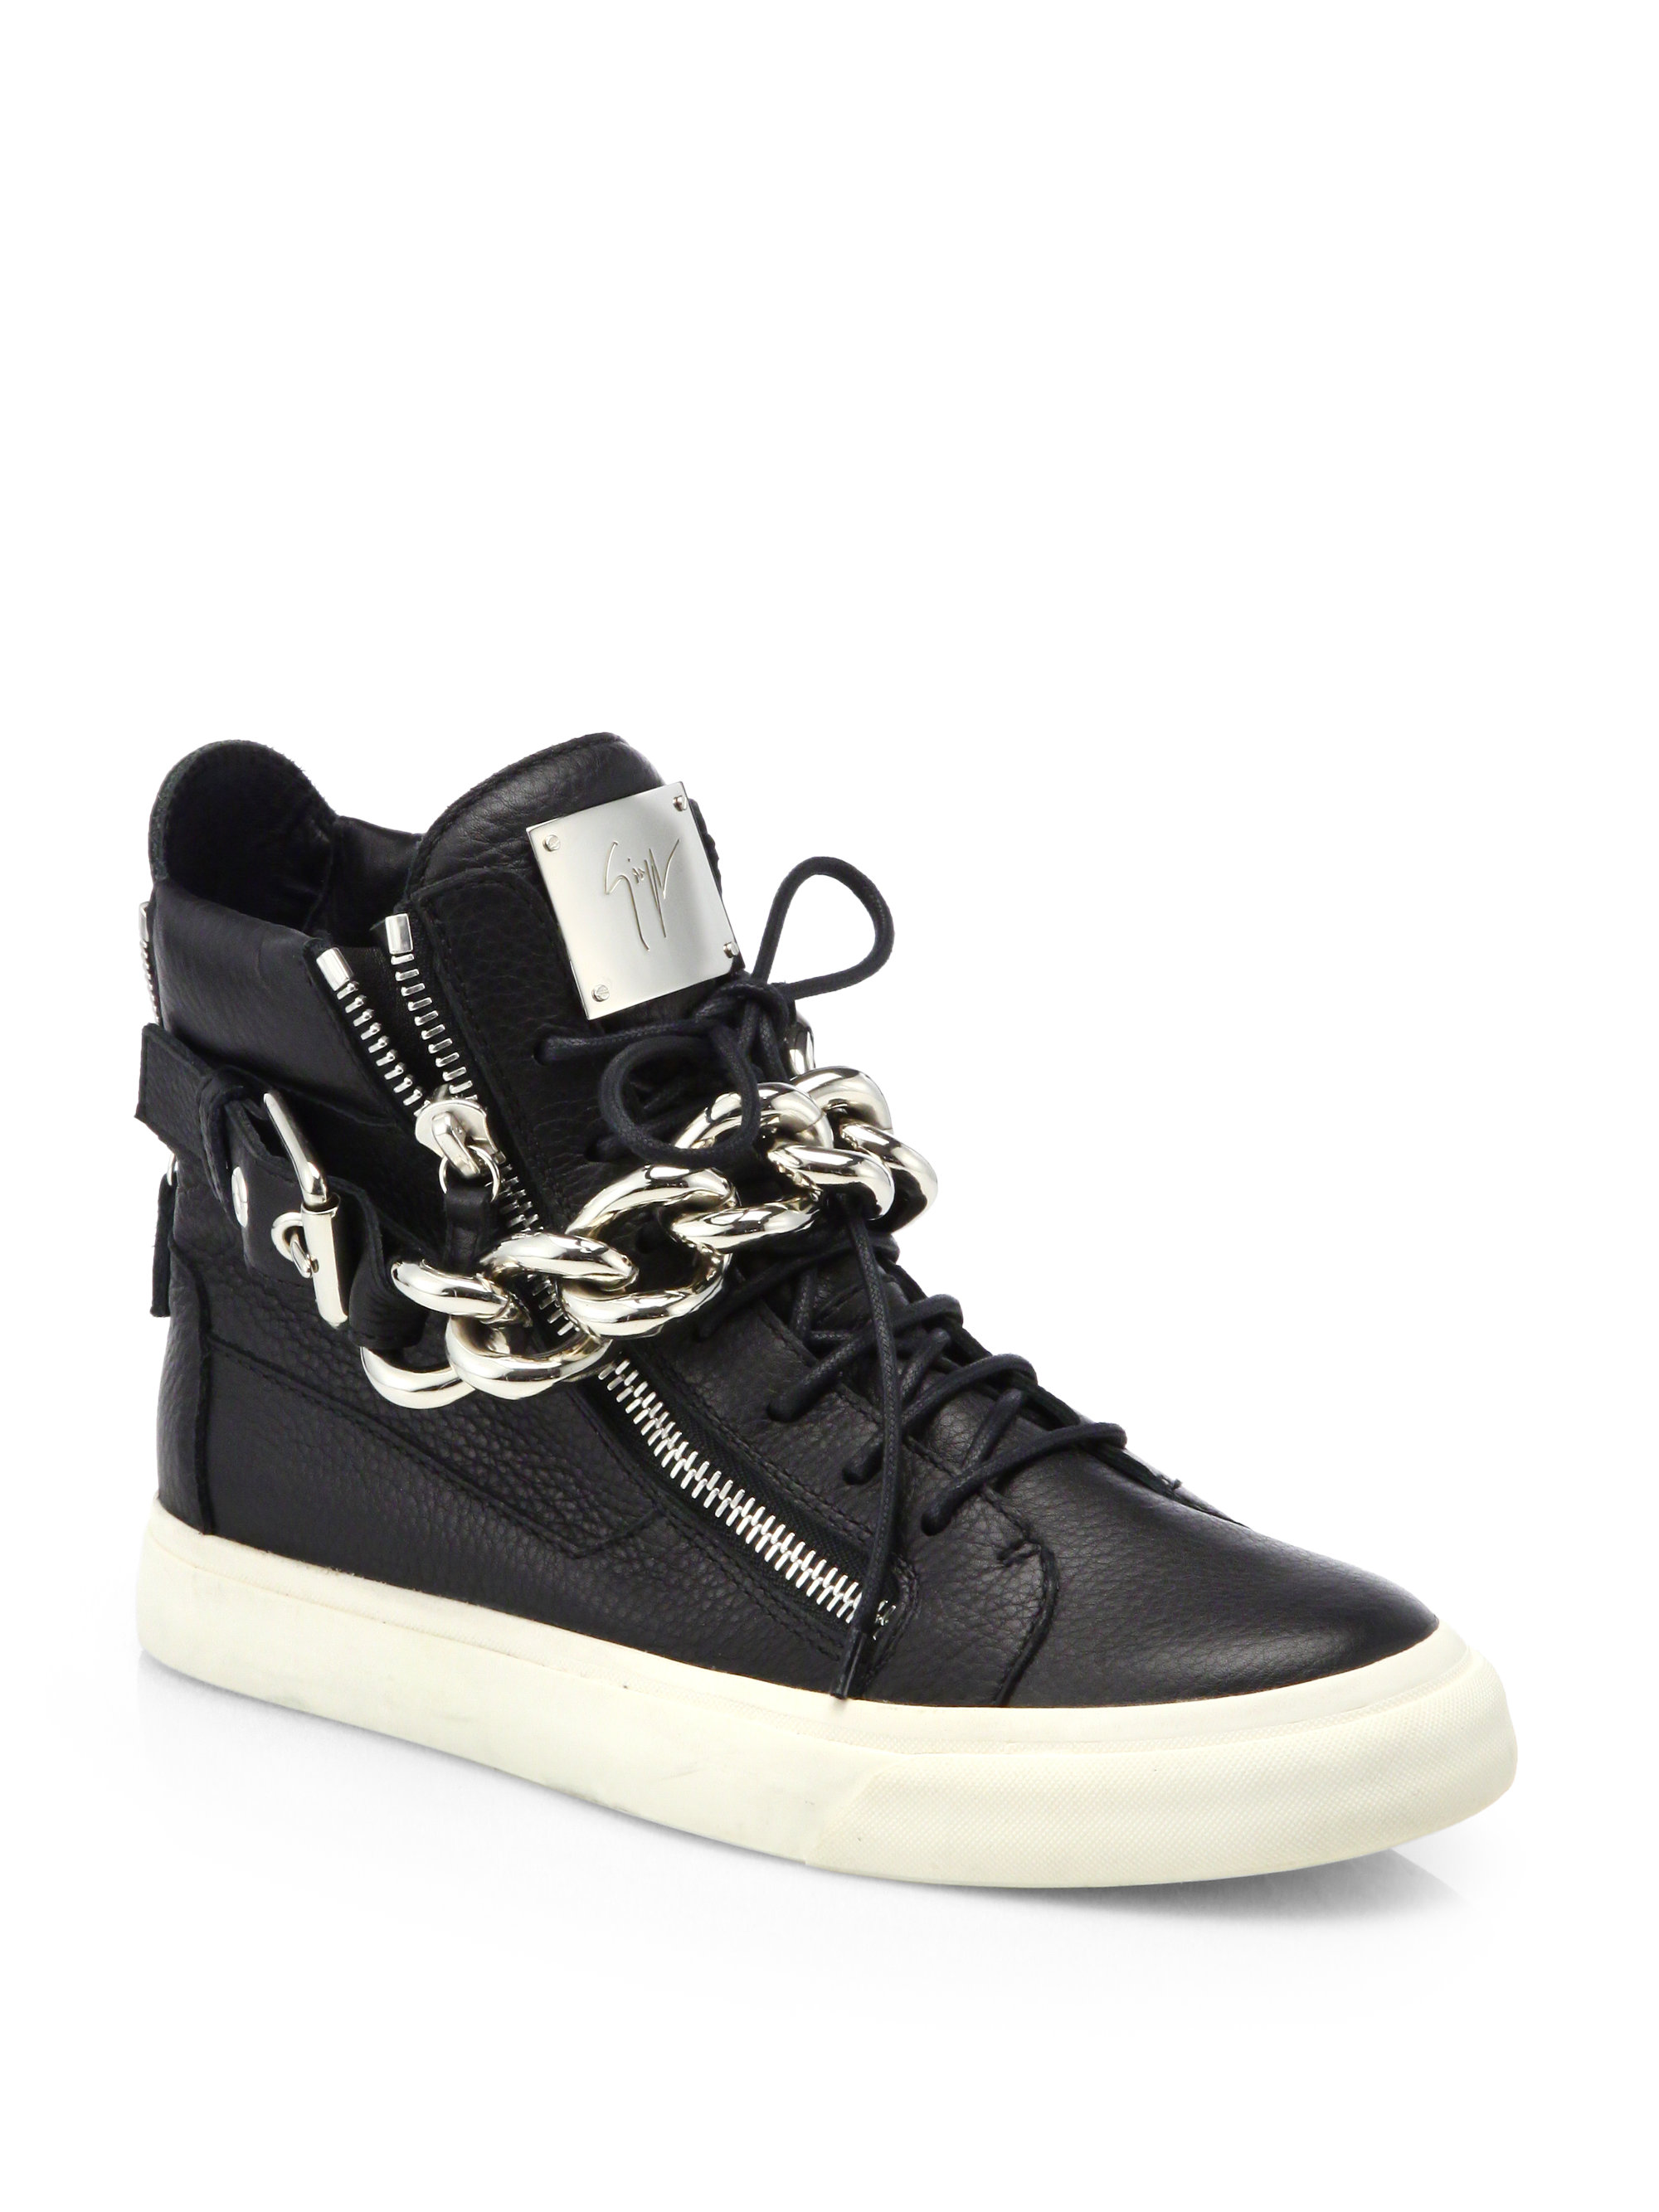 Lyst - Giuseppe Zanotti Silver Chain Hightop Sneakers in Black for Men